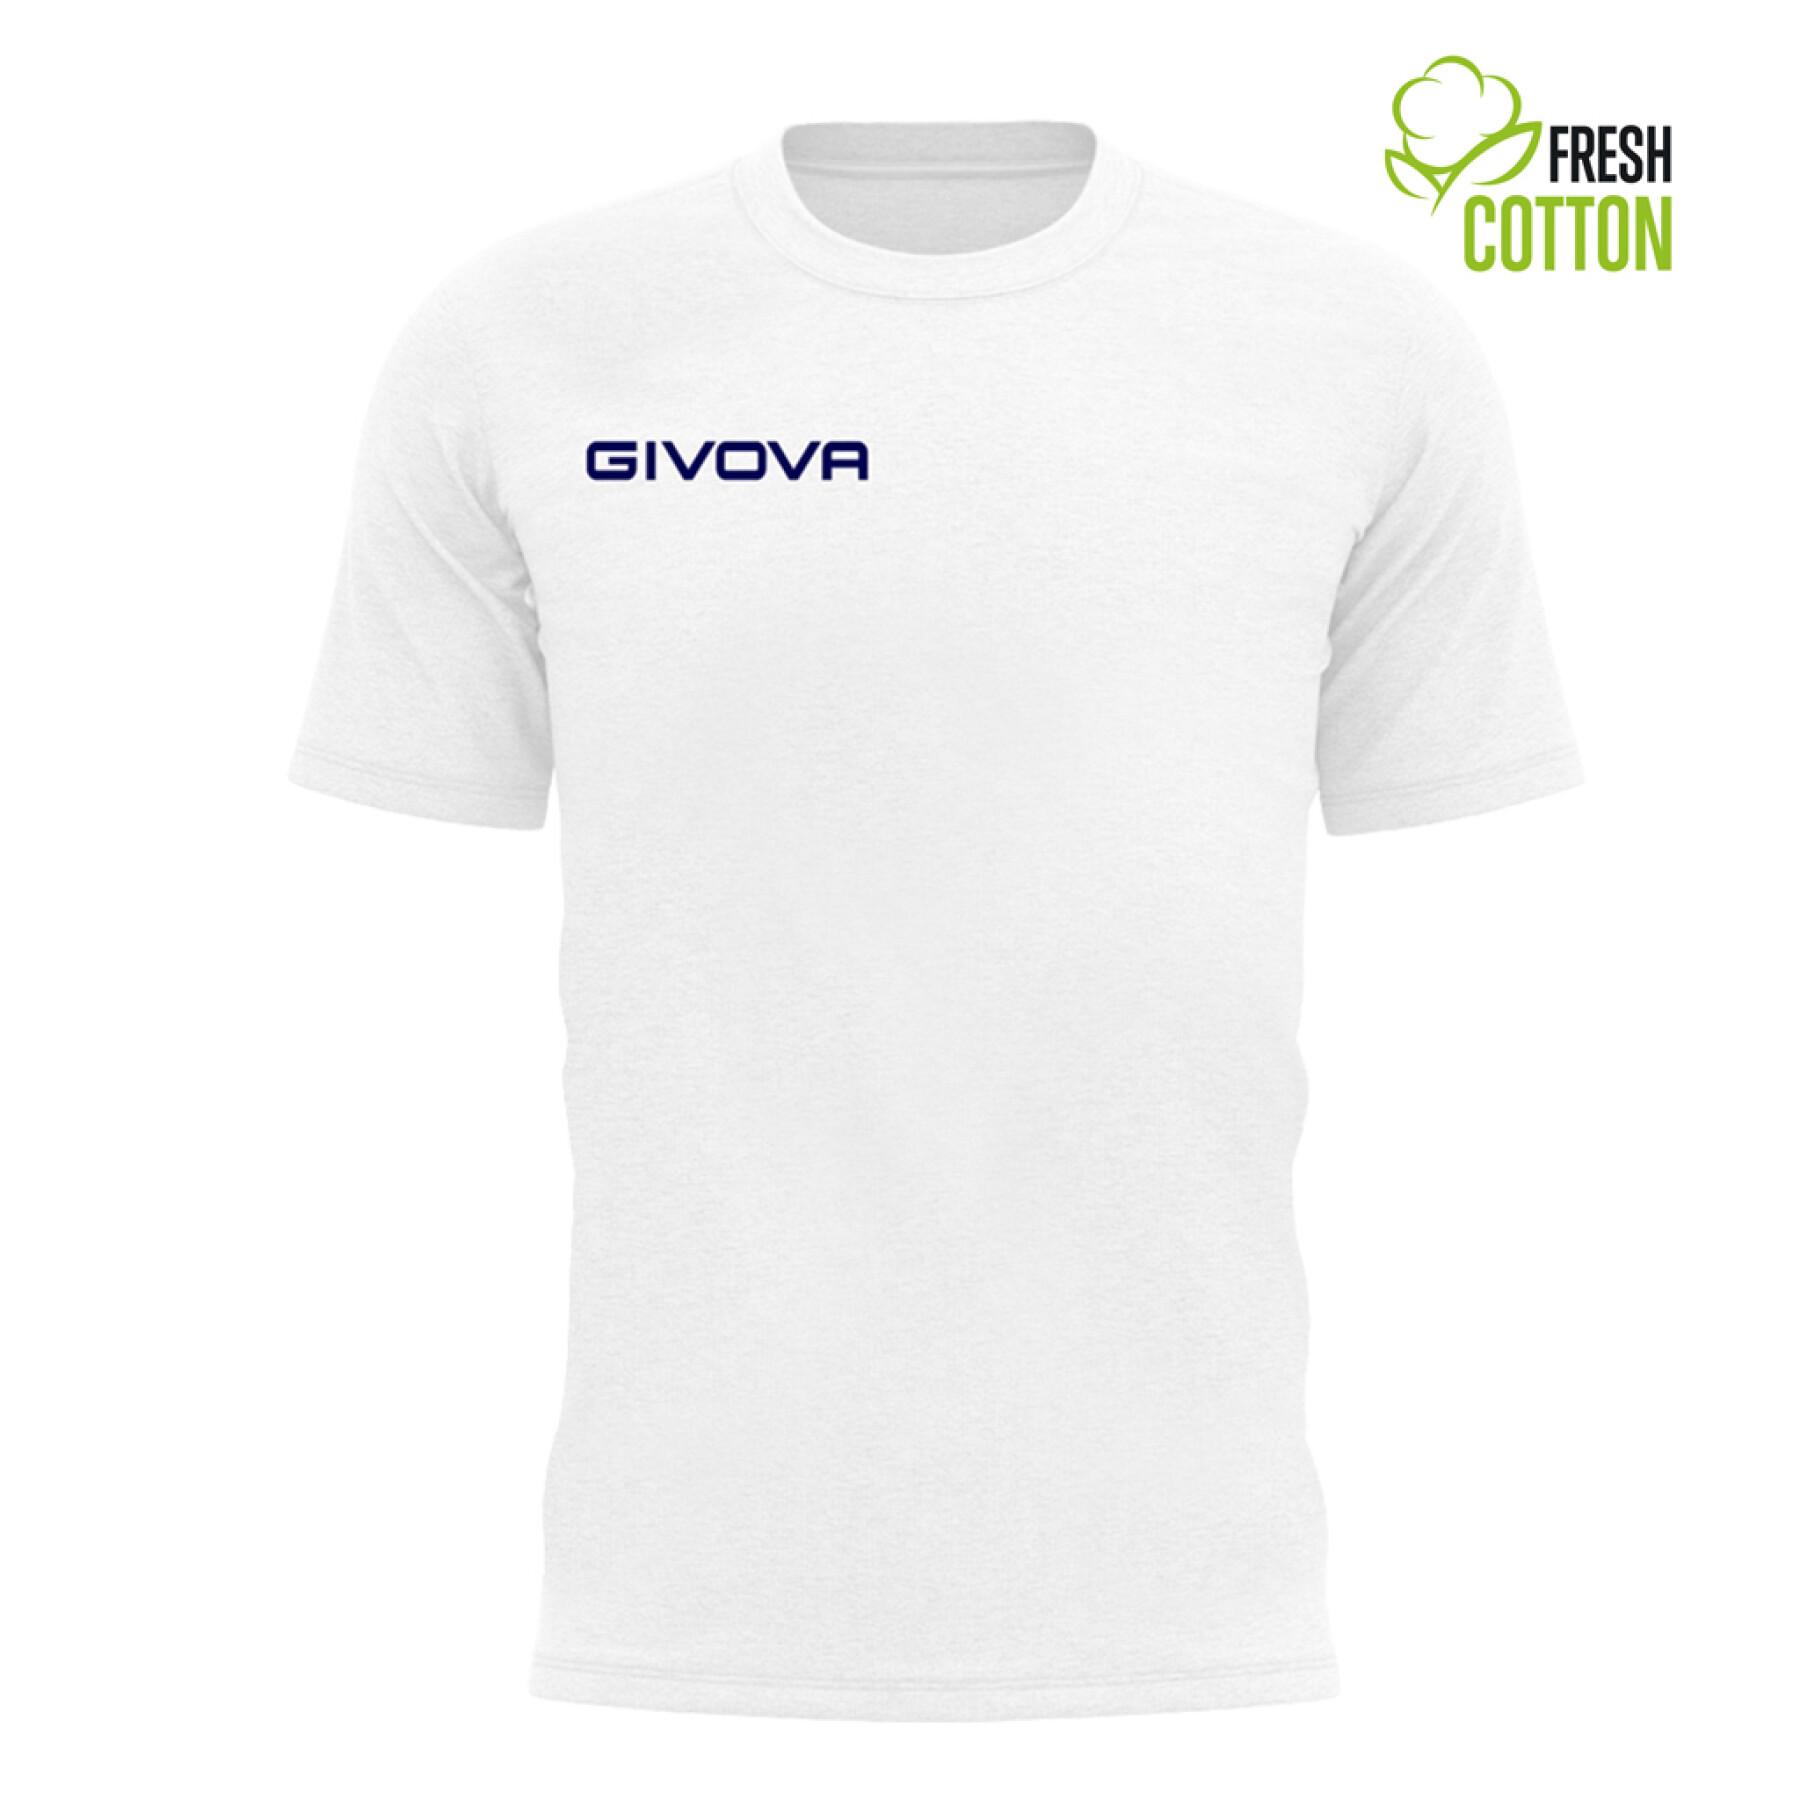 T-shirt coton Givova Fresh